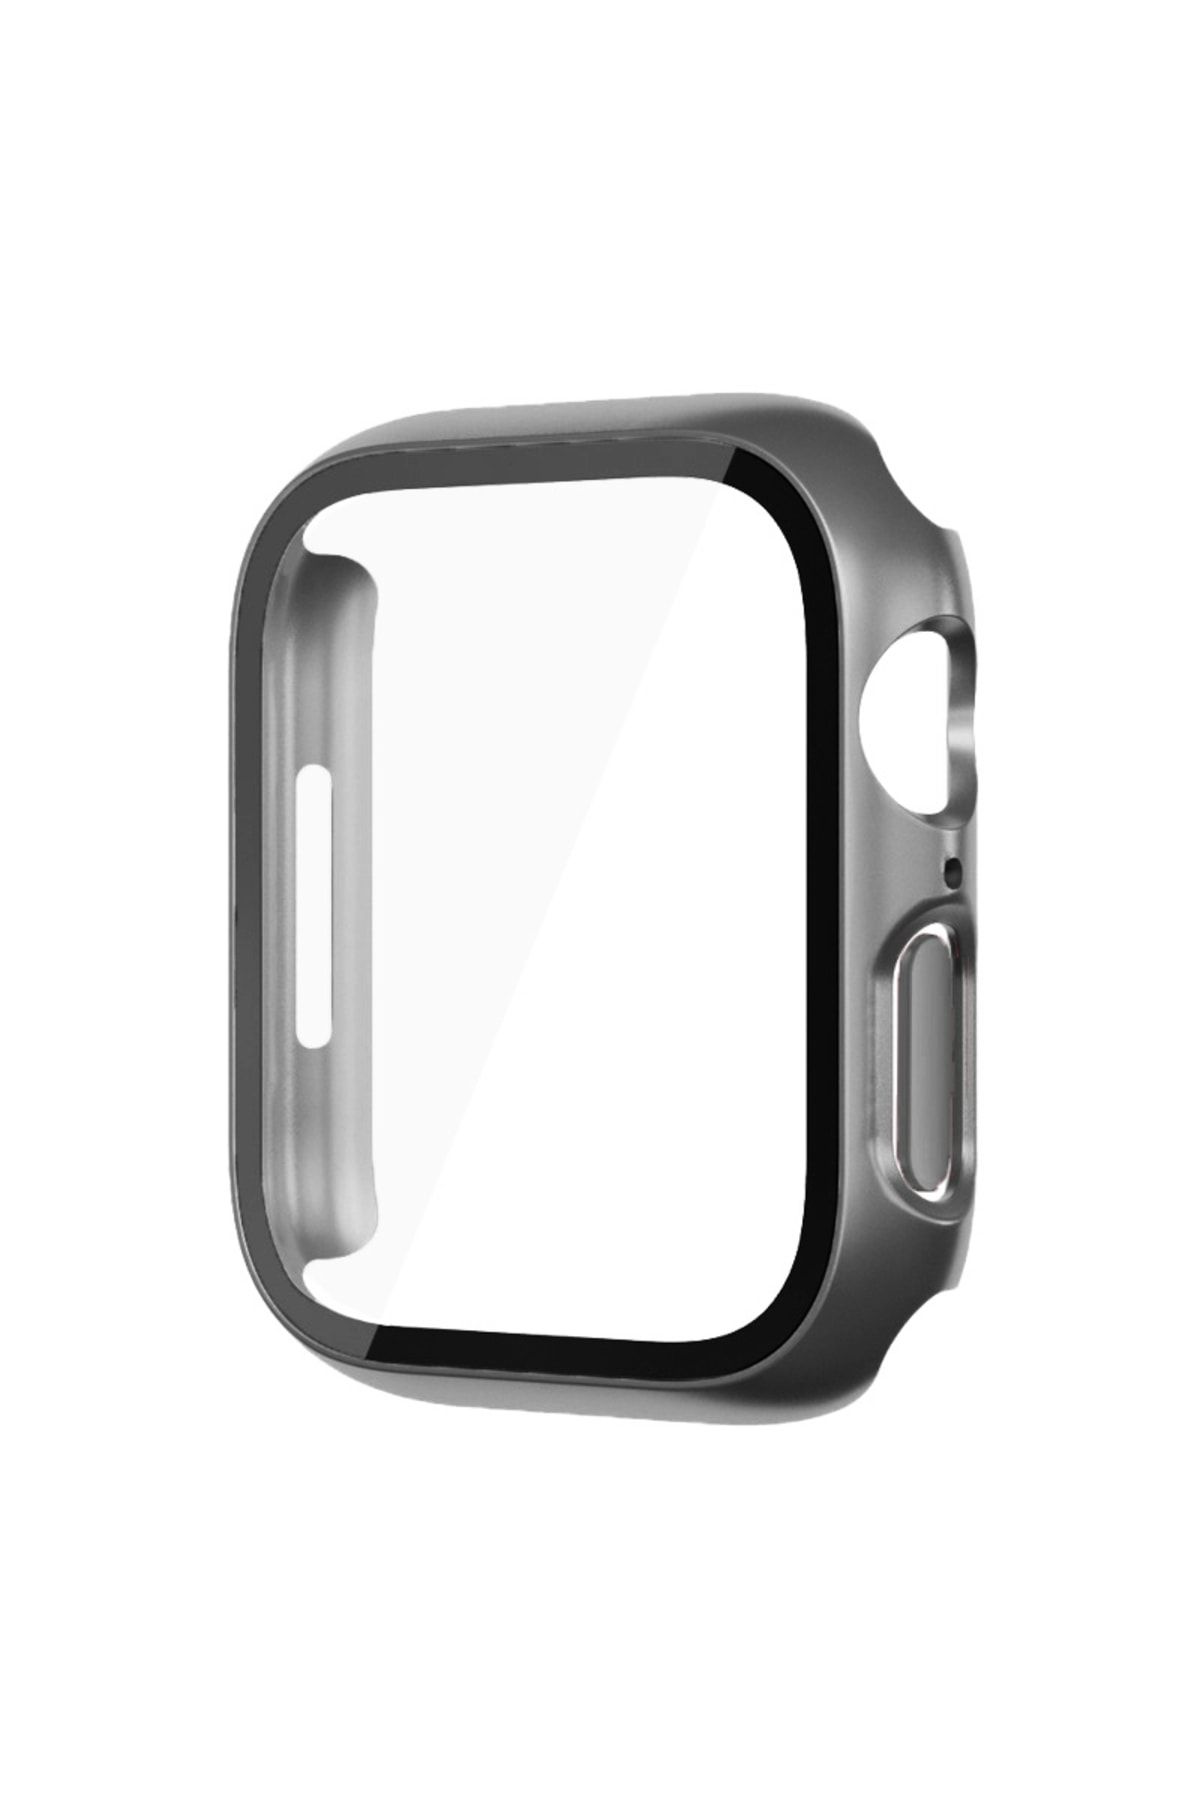 QUSE Apple Watch Seri 3-2 42mm Uyumlu Ekran ve Kasa Koruyucu Uzay Grisi